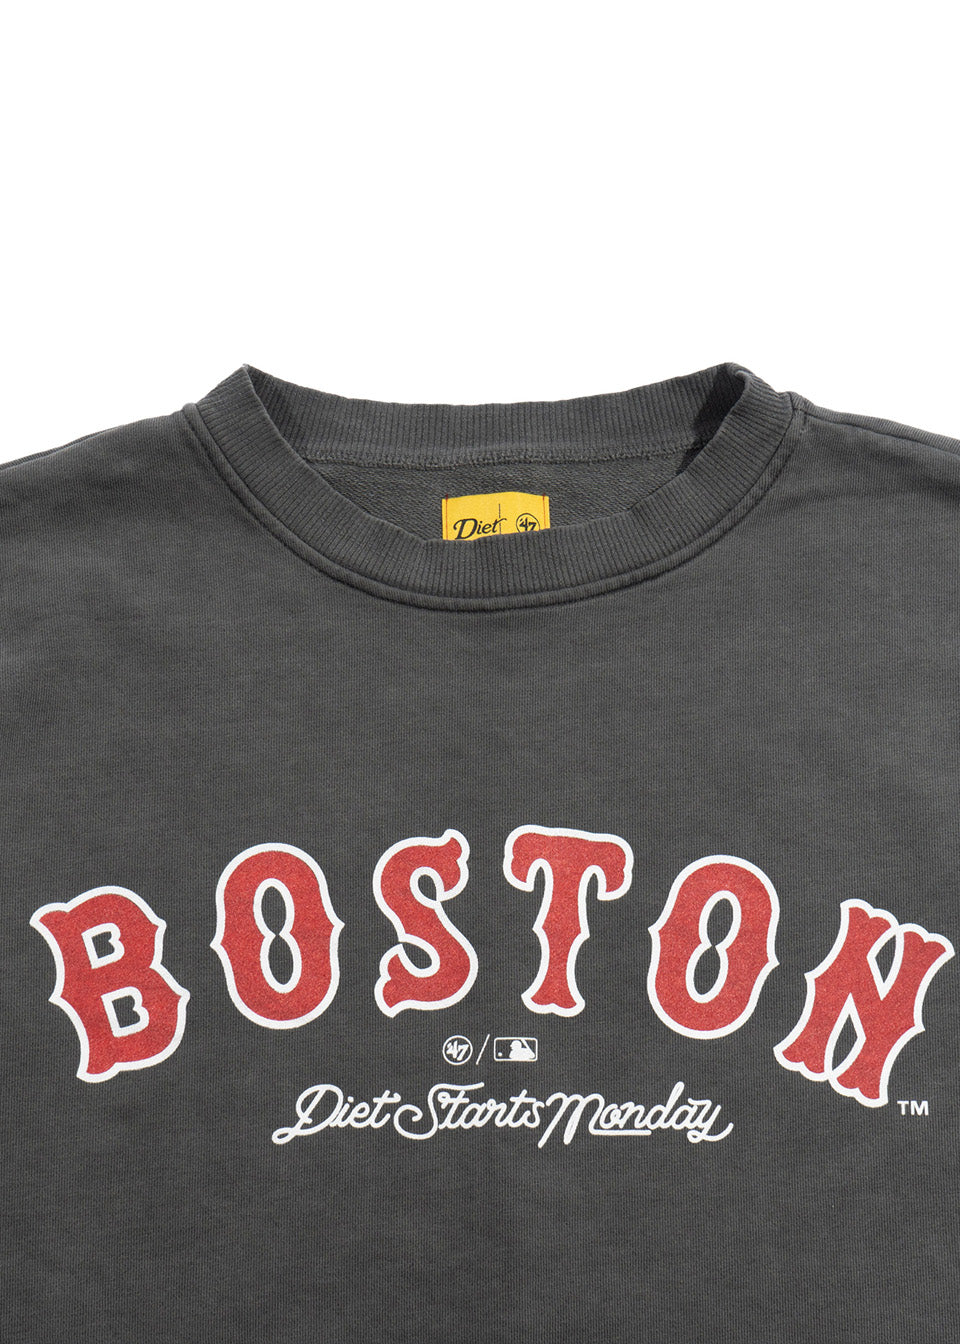 Red Sox City Sweatshirt - Vintage Black